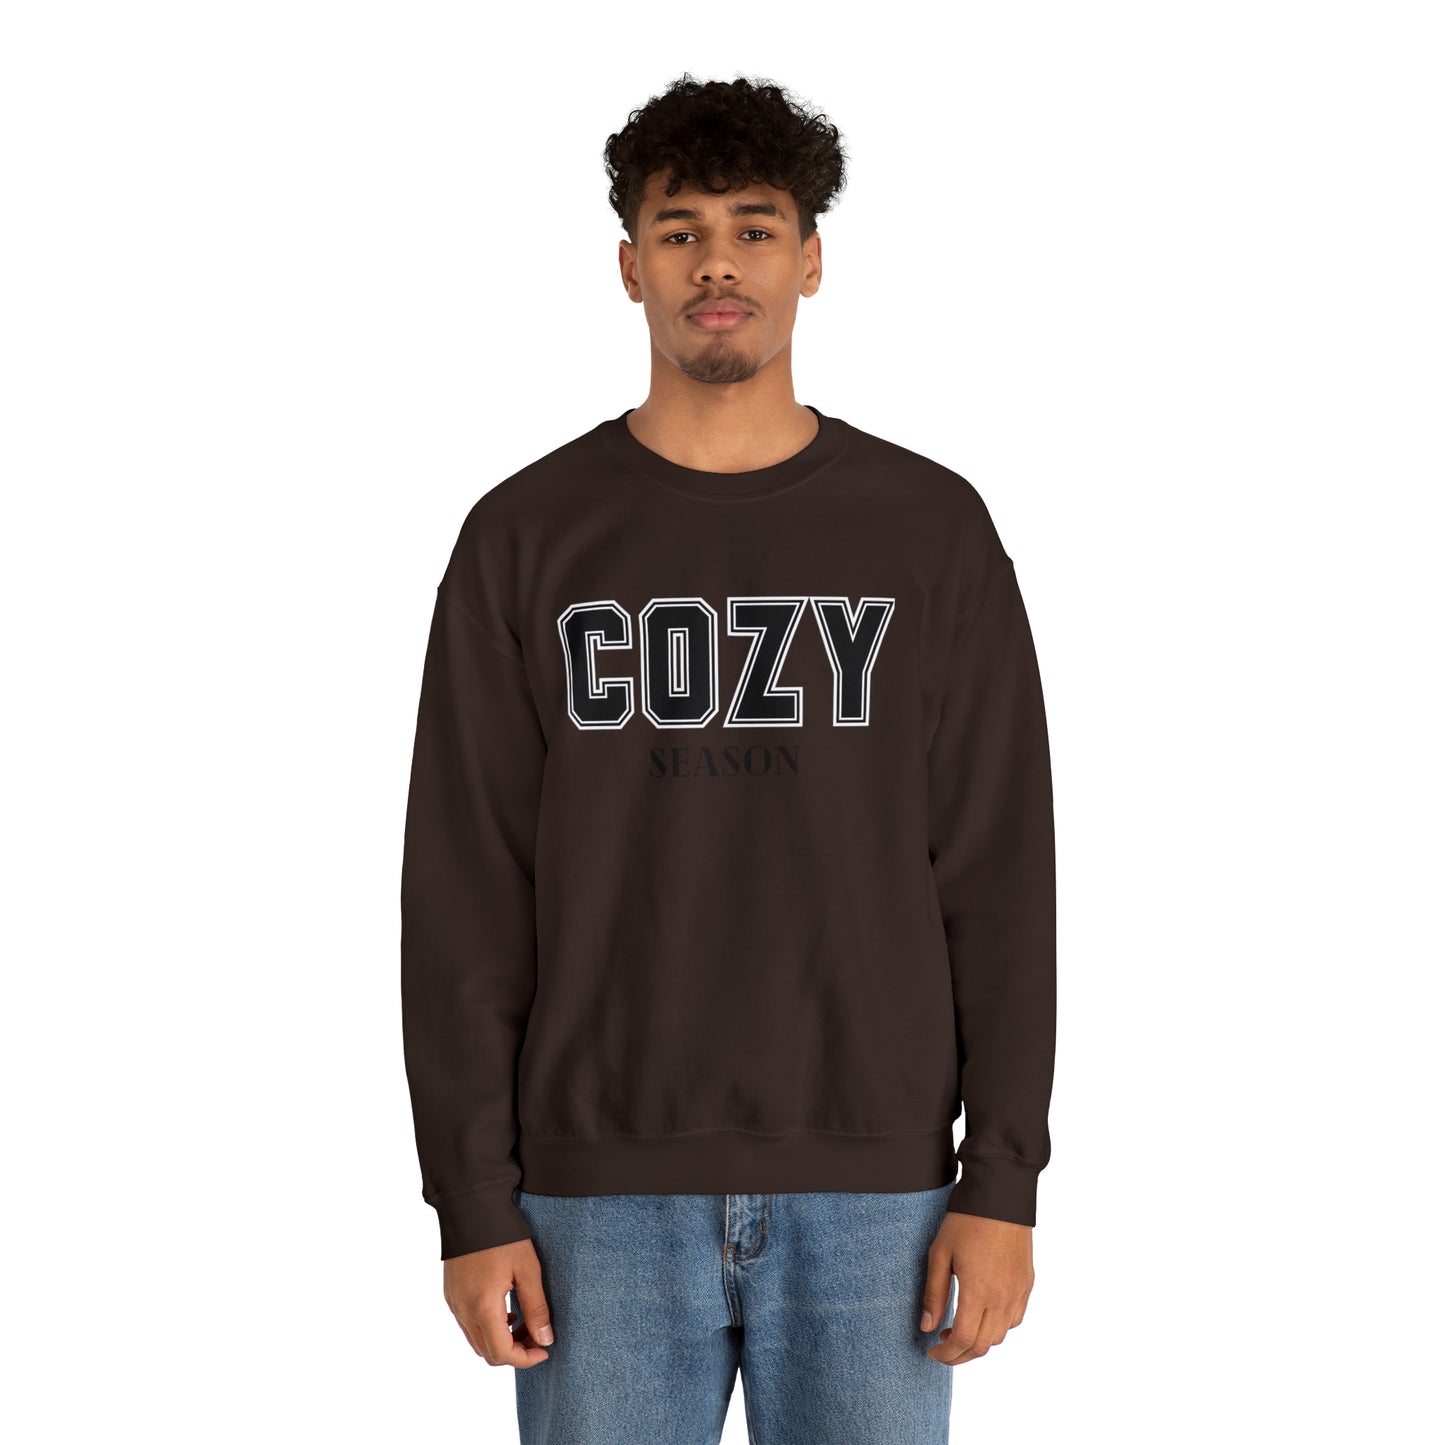 Cozy Season Chocolate Brown Unisex Heavy Blend™ Crewneck Sweatshirt